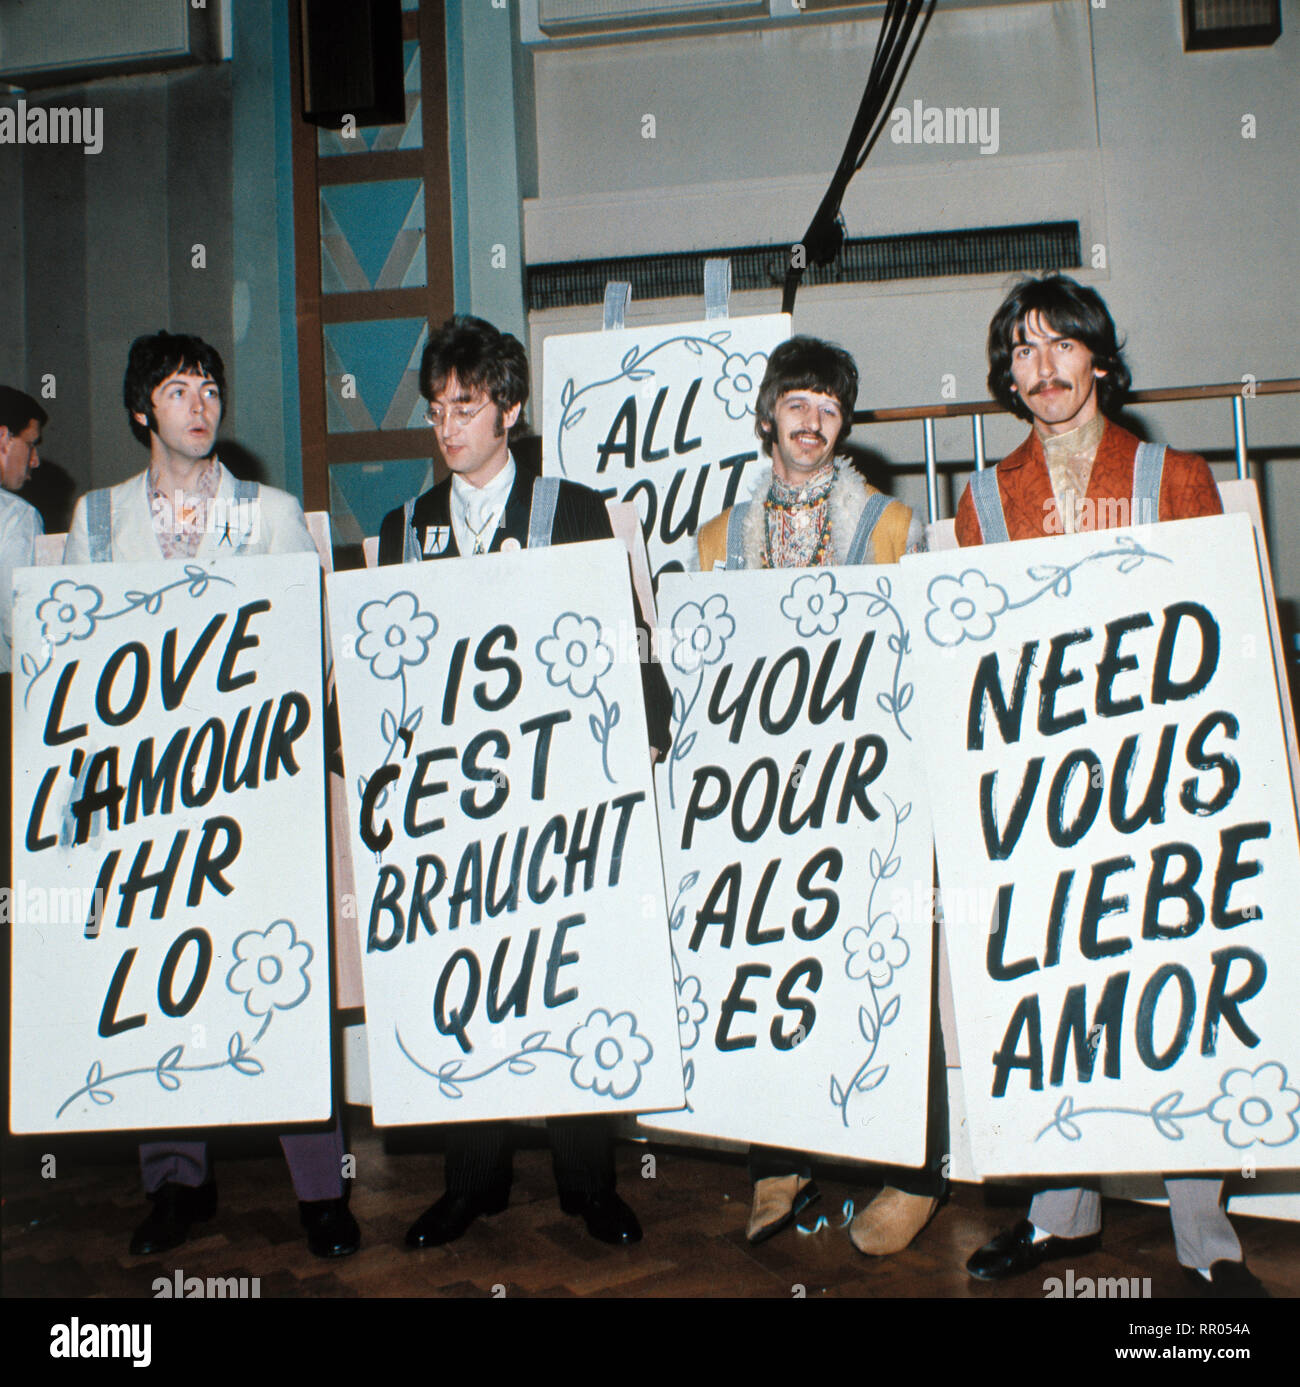 Die BEATLES - Paul McCartney, John Lennon, Ringo Starr, George Harrison - präsentieren den Song: "All You Need Is Love", 1967/Überschrift: the Beatles Stockfoto